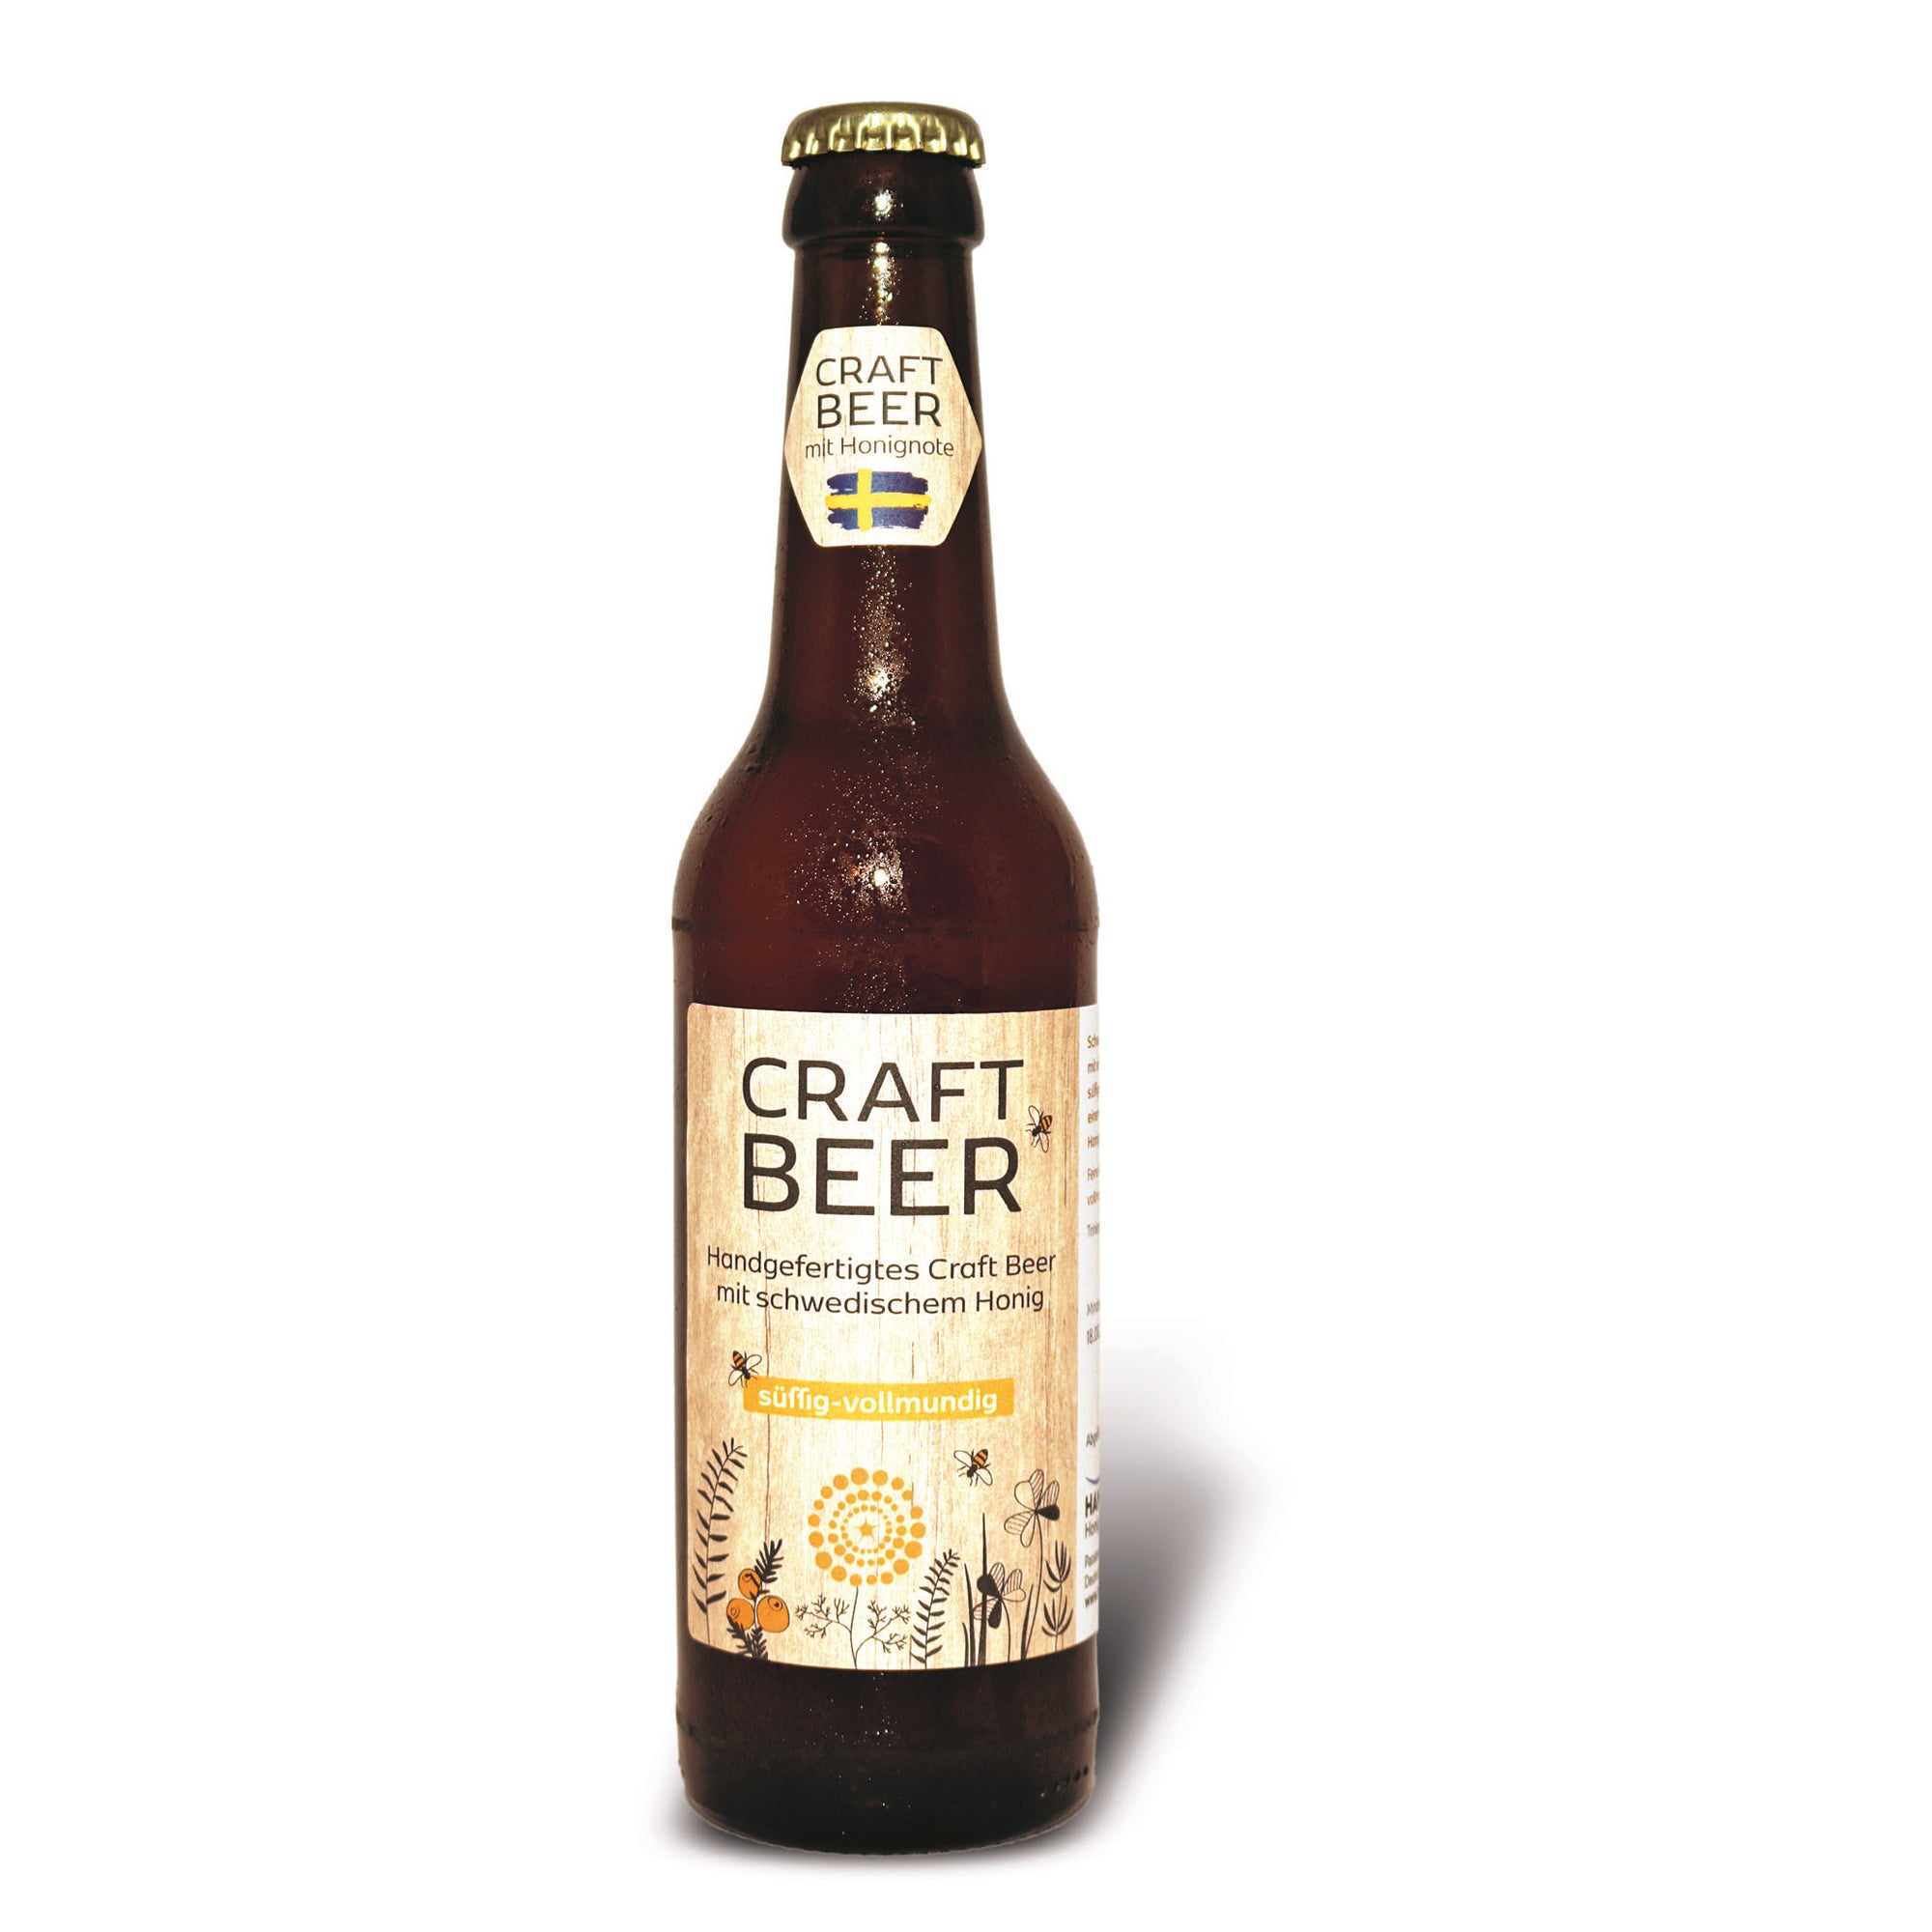 Handmade craft beer with Swedish honey (tasty - full-bodied)